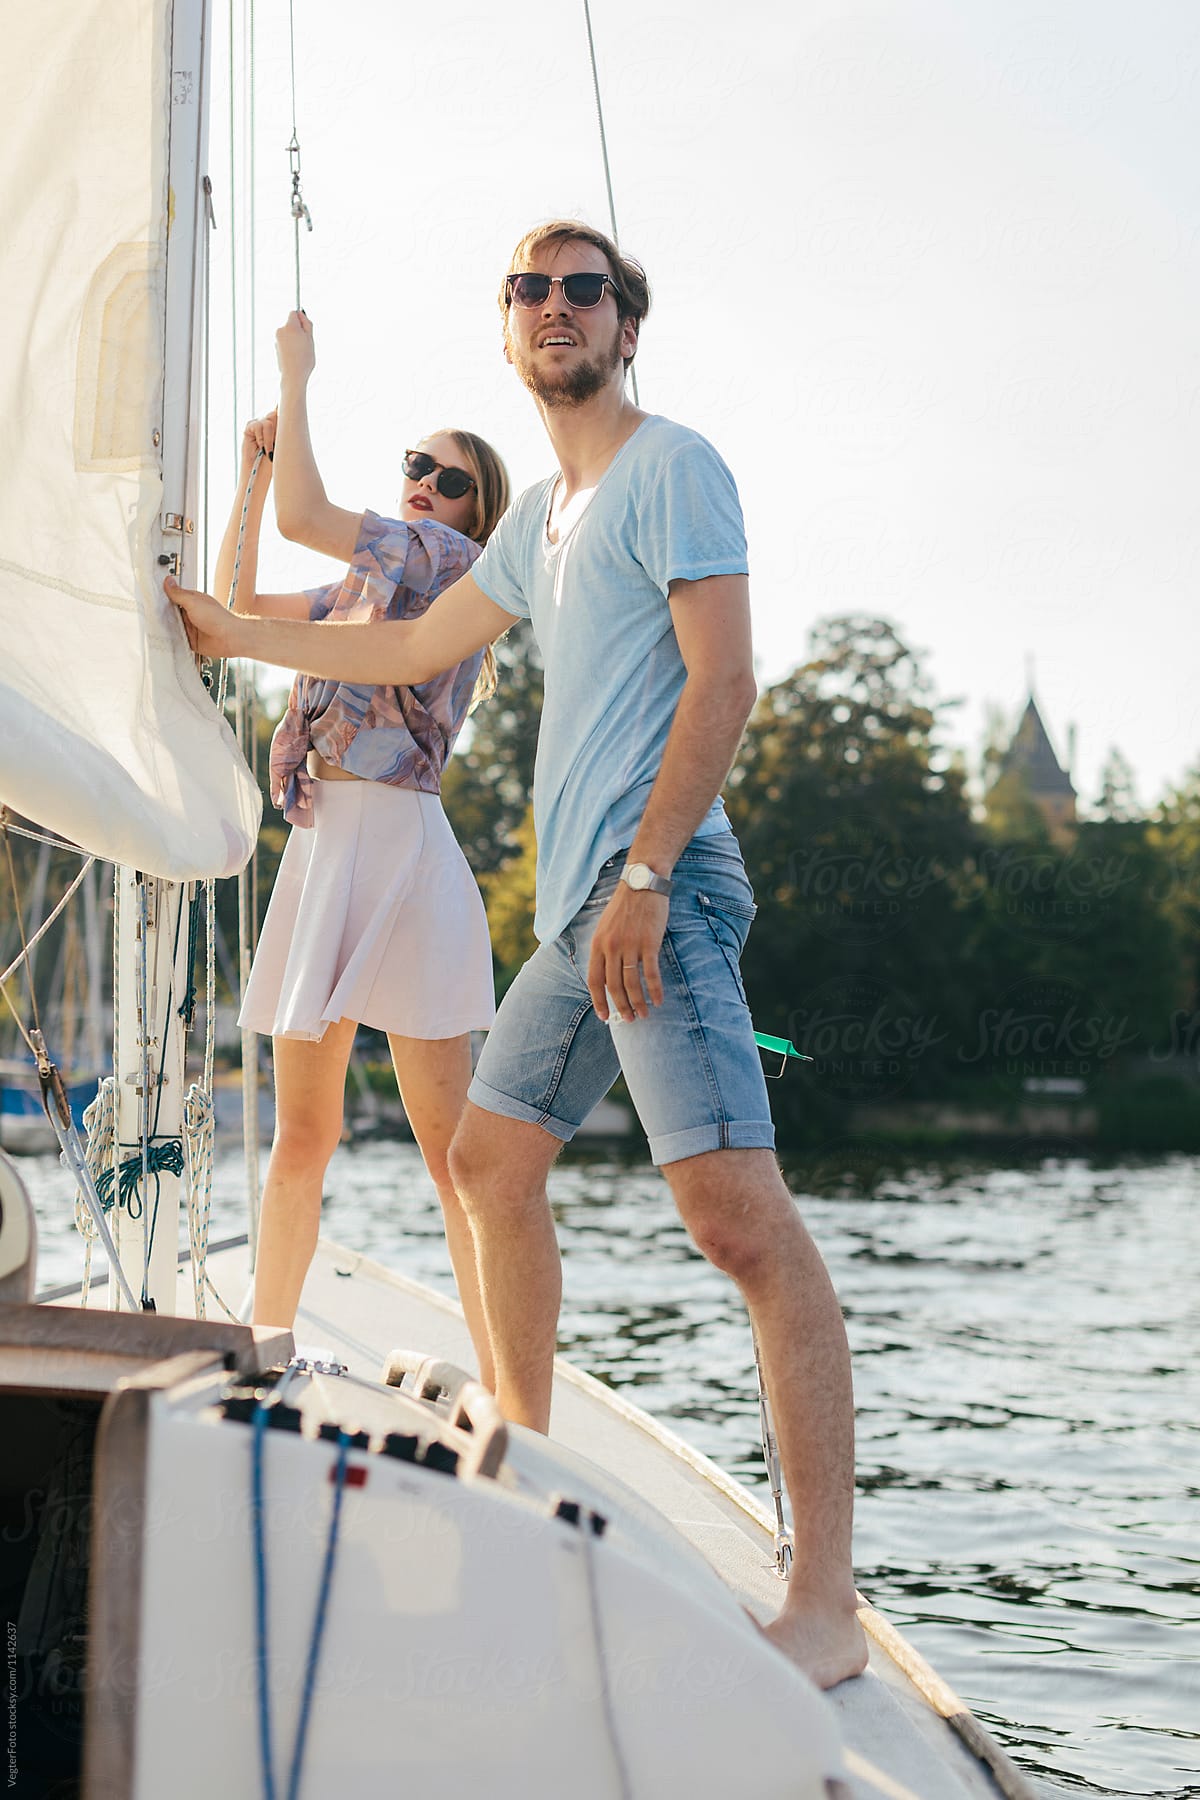 Man and woman hoisting sail